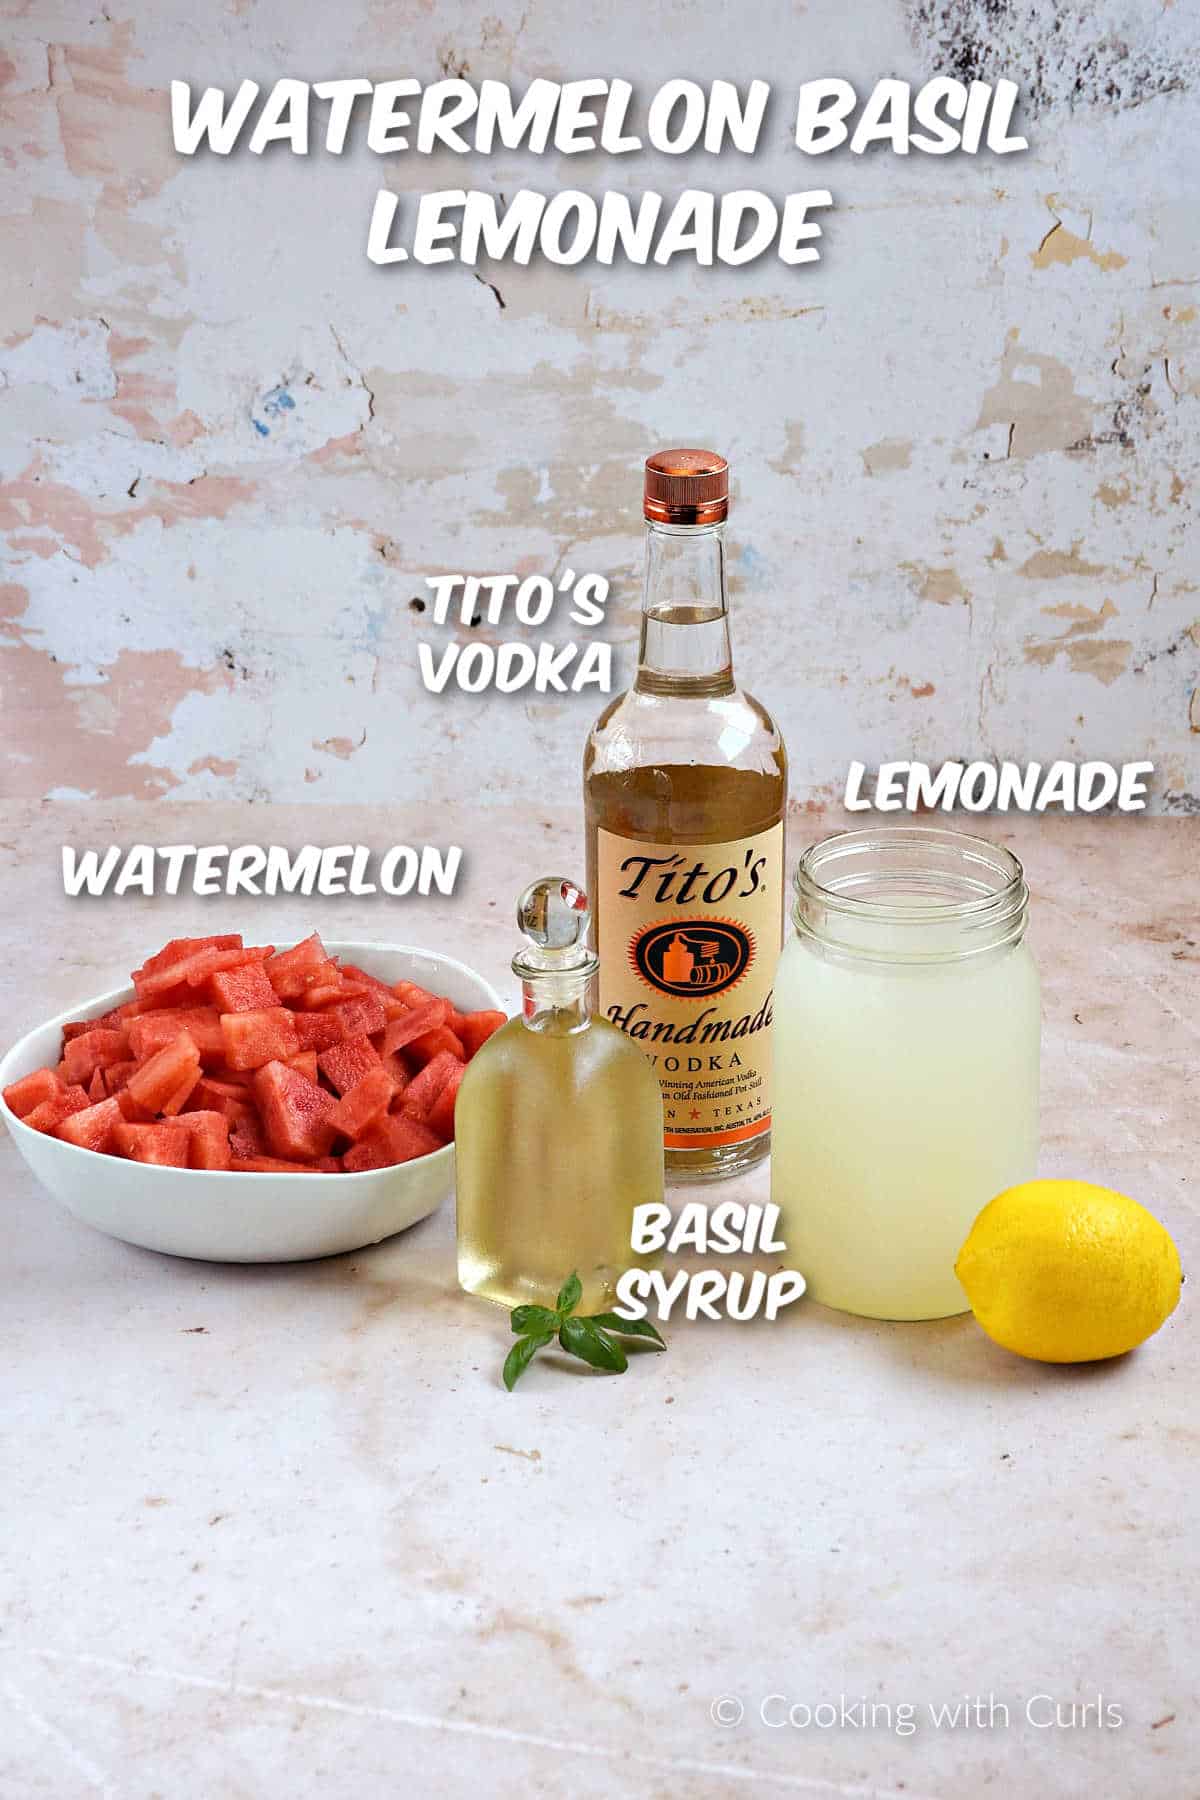 Ingredients needed to make watermelon basil lemonade with vodka.